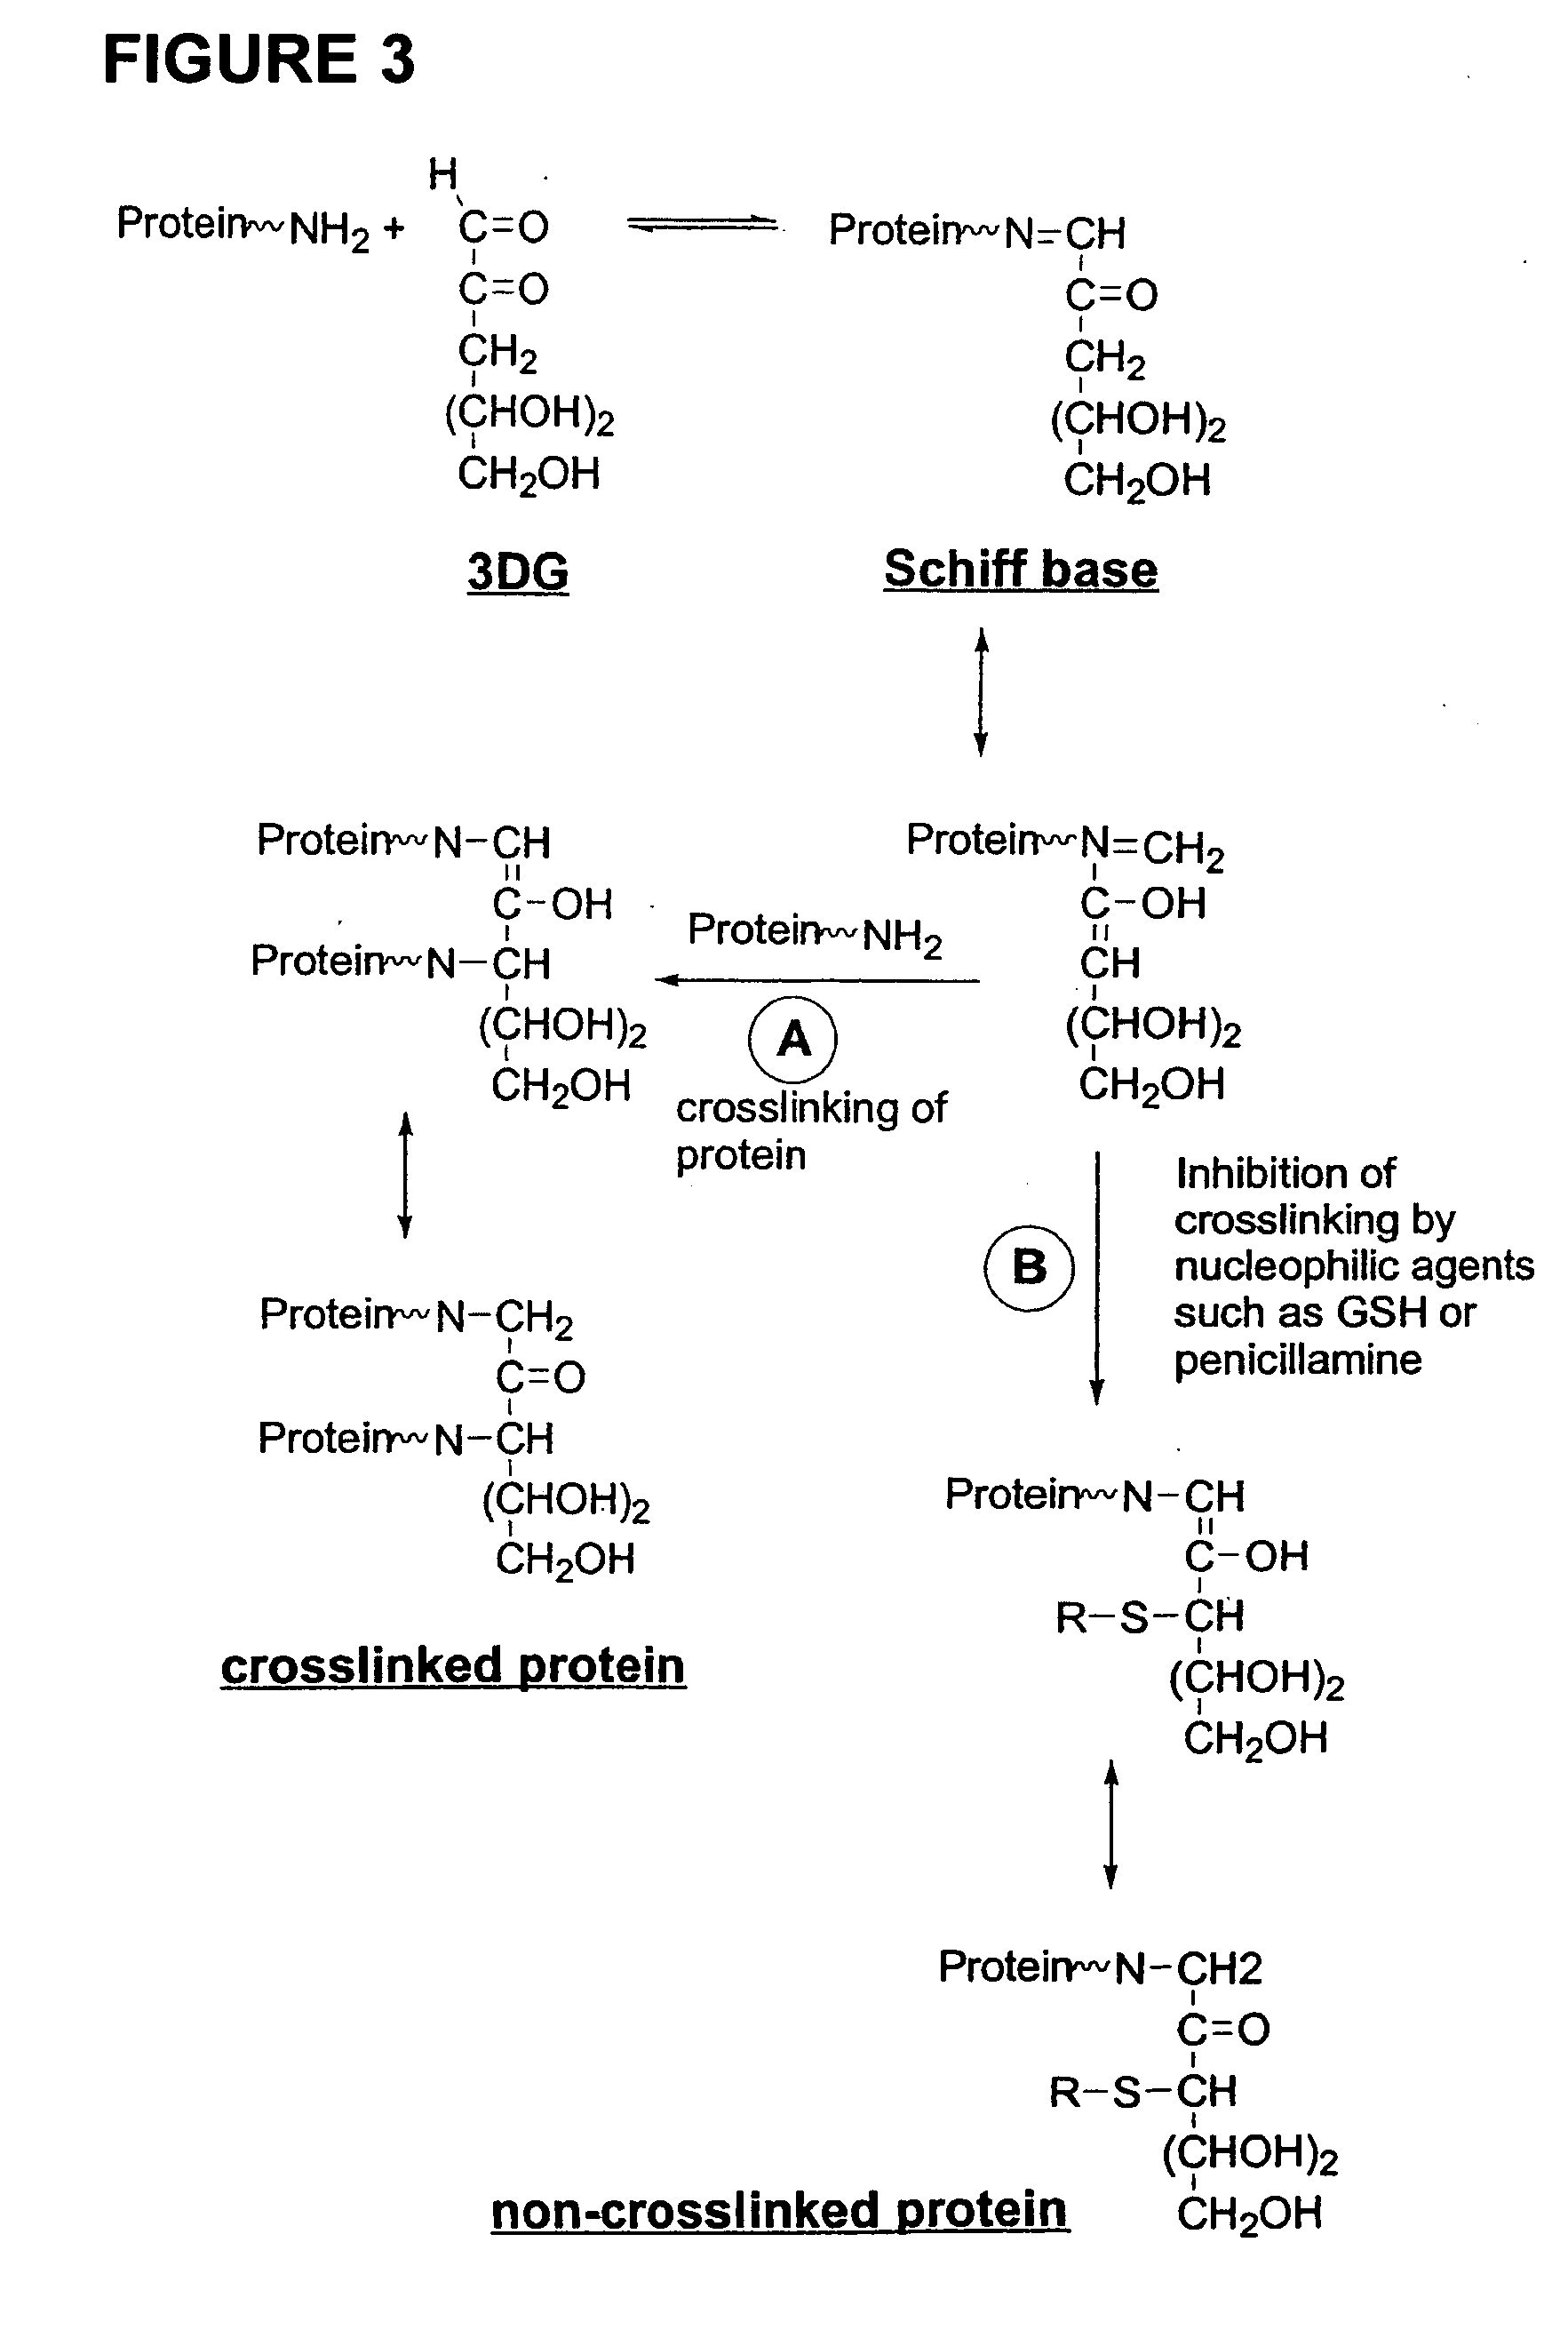 Dermal delivery of n-methyl-glucamine and n-methyl-glucamine compounds